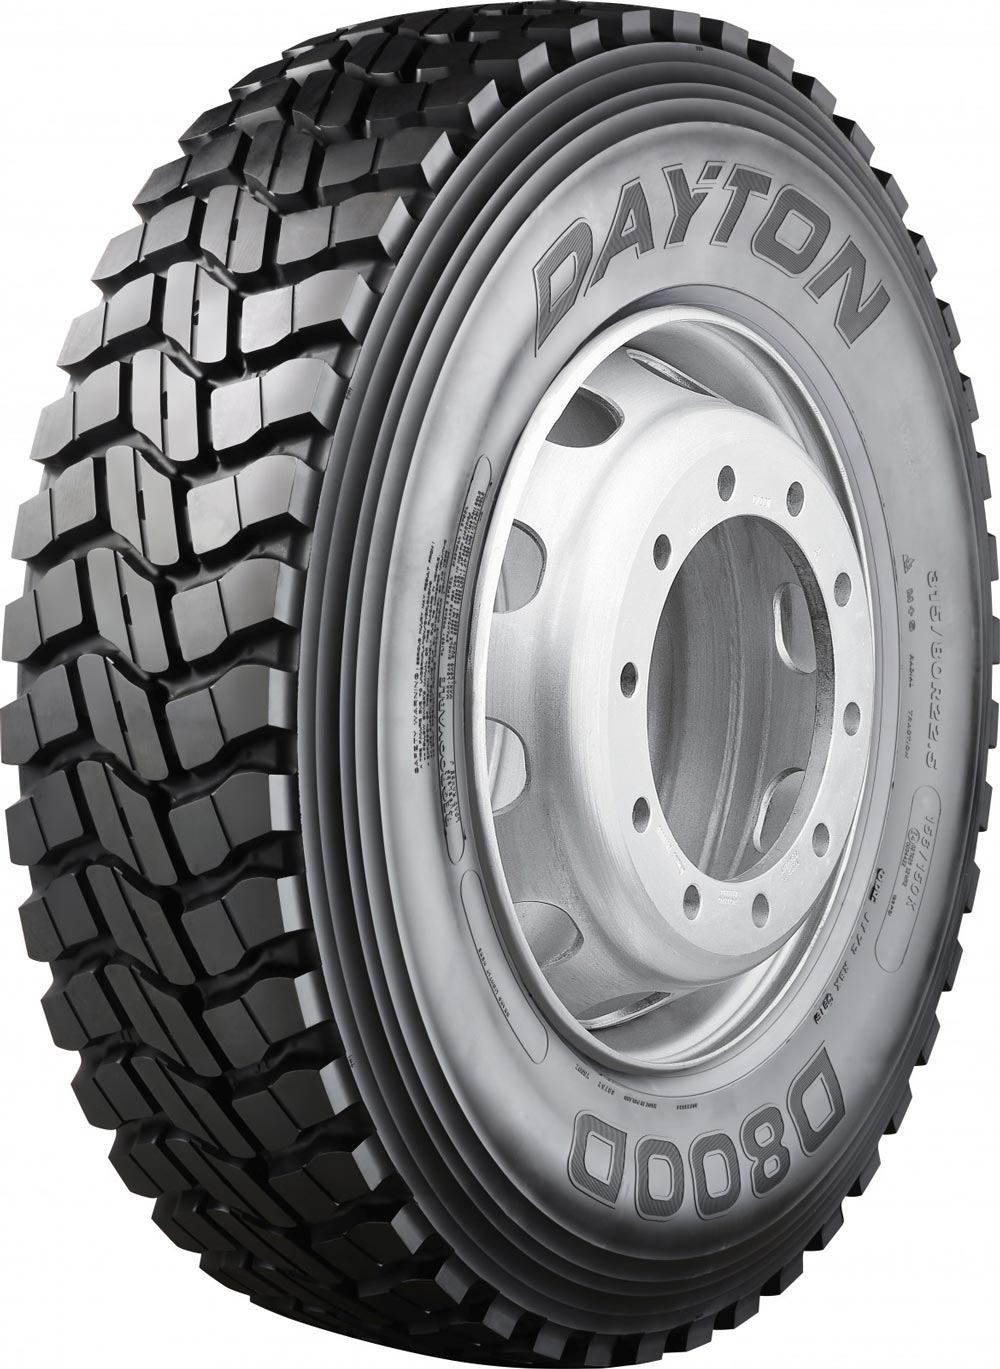 product_type-heavy_tires DAYTON D800D 13 R22.5 K